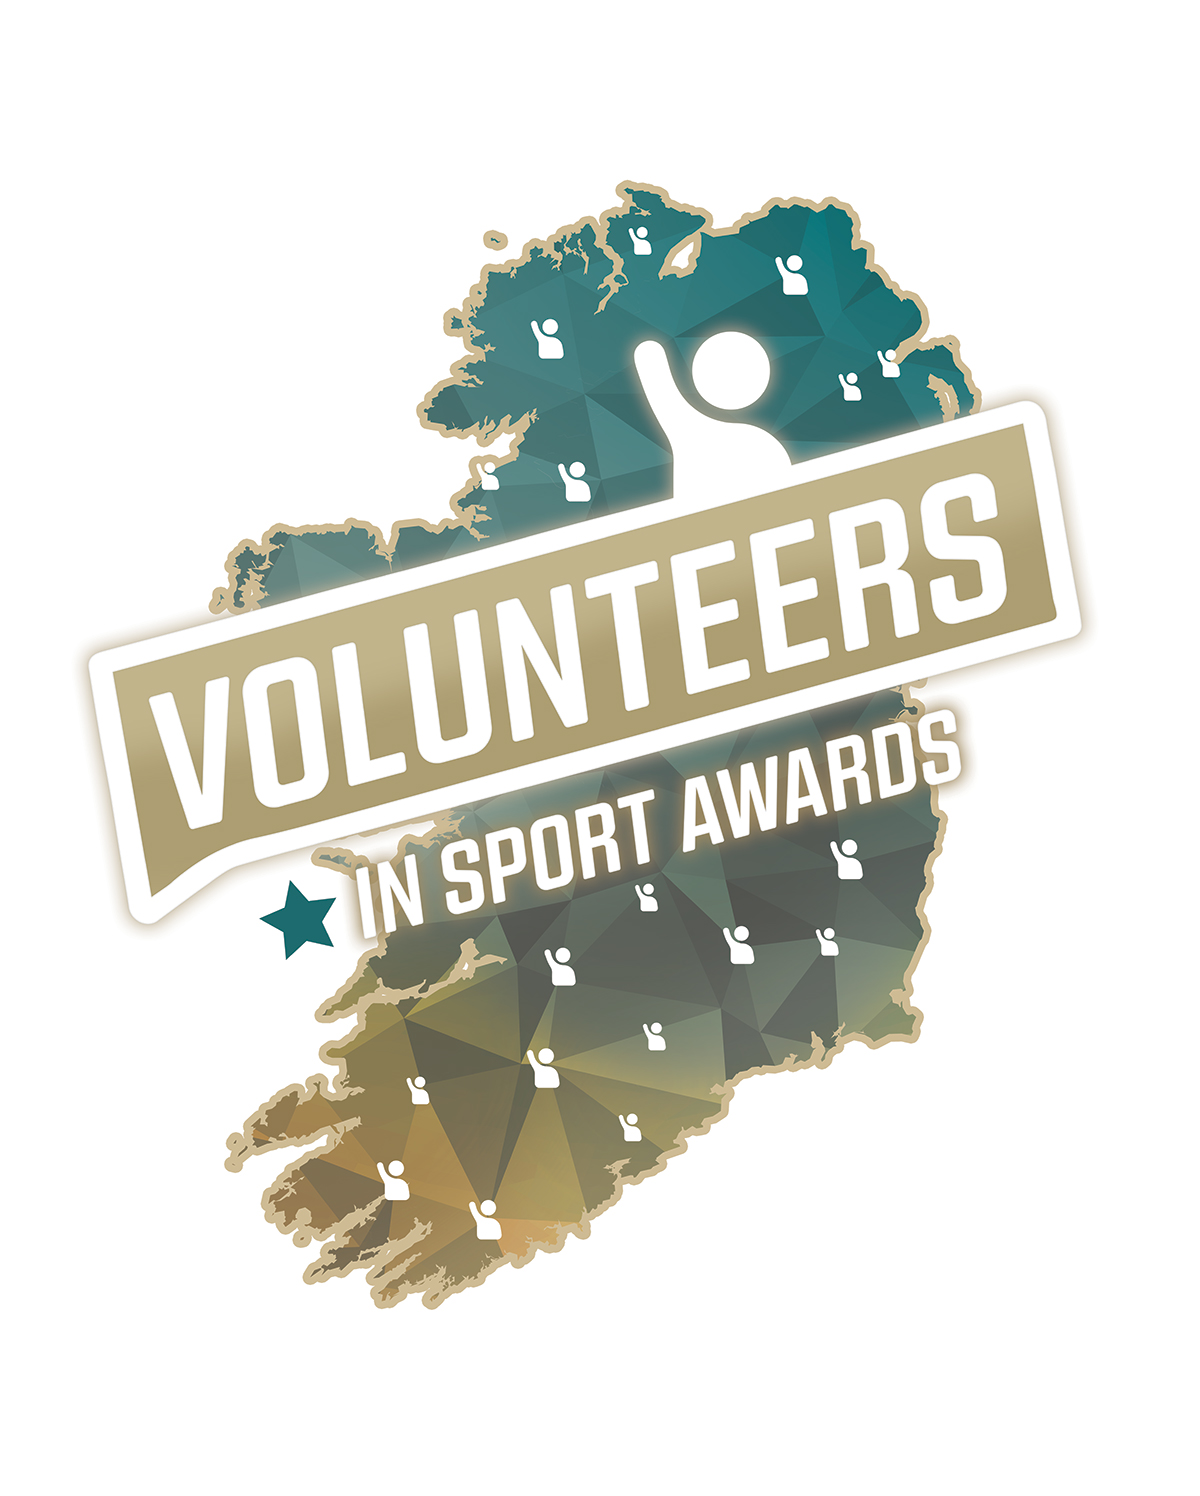 Volunteers in Sport Awards image